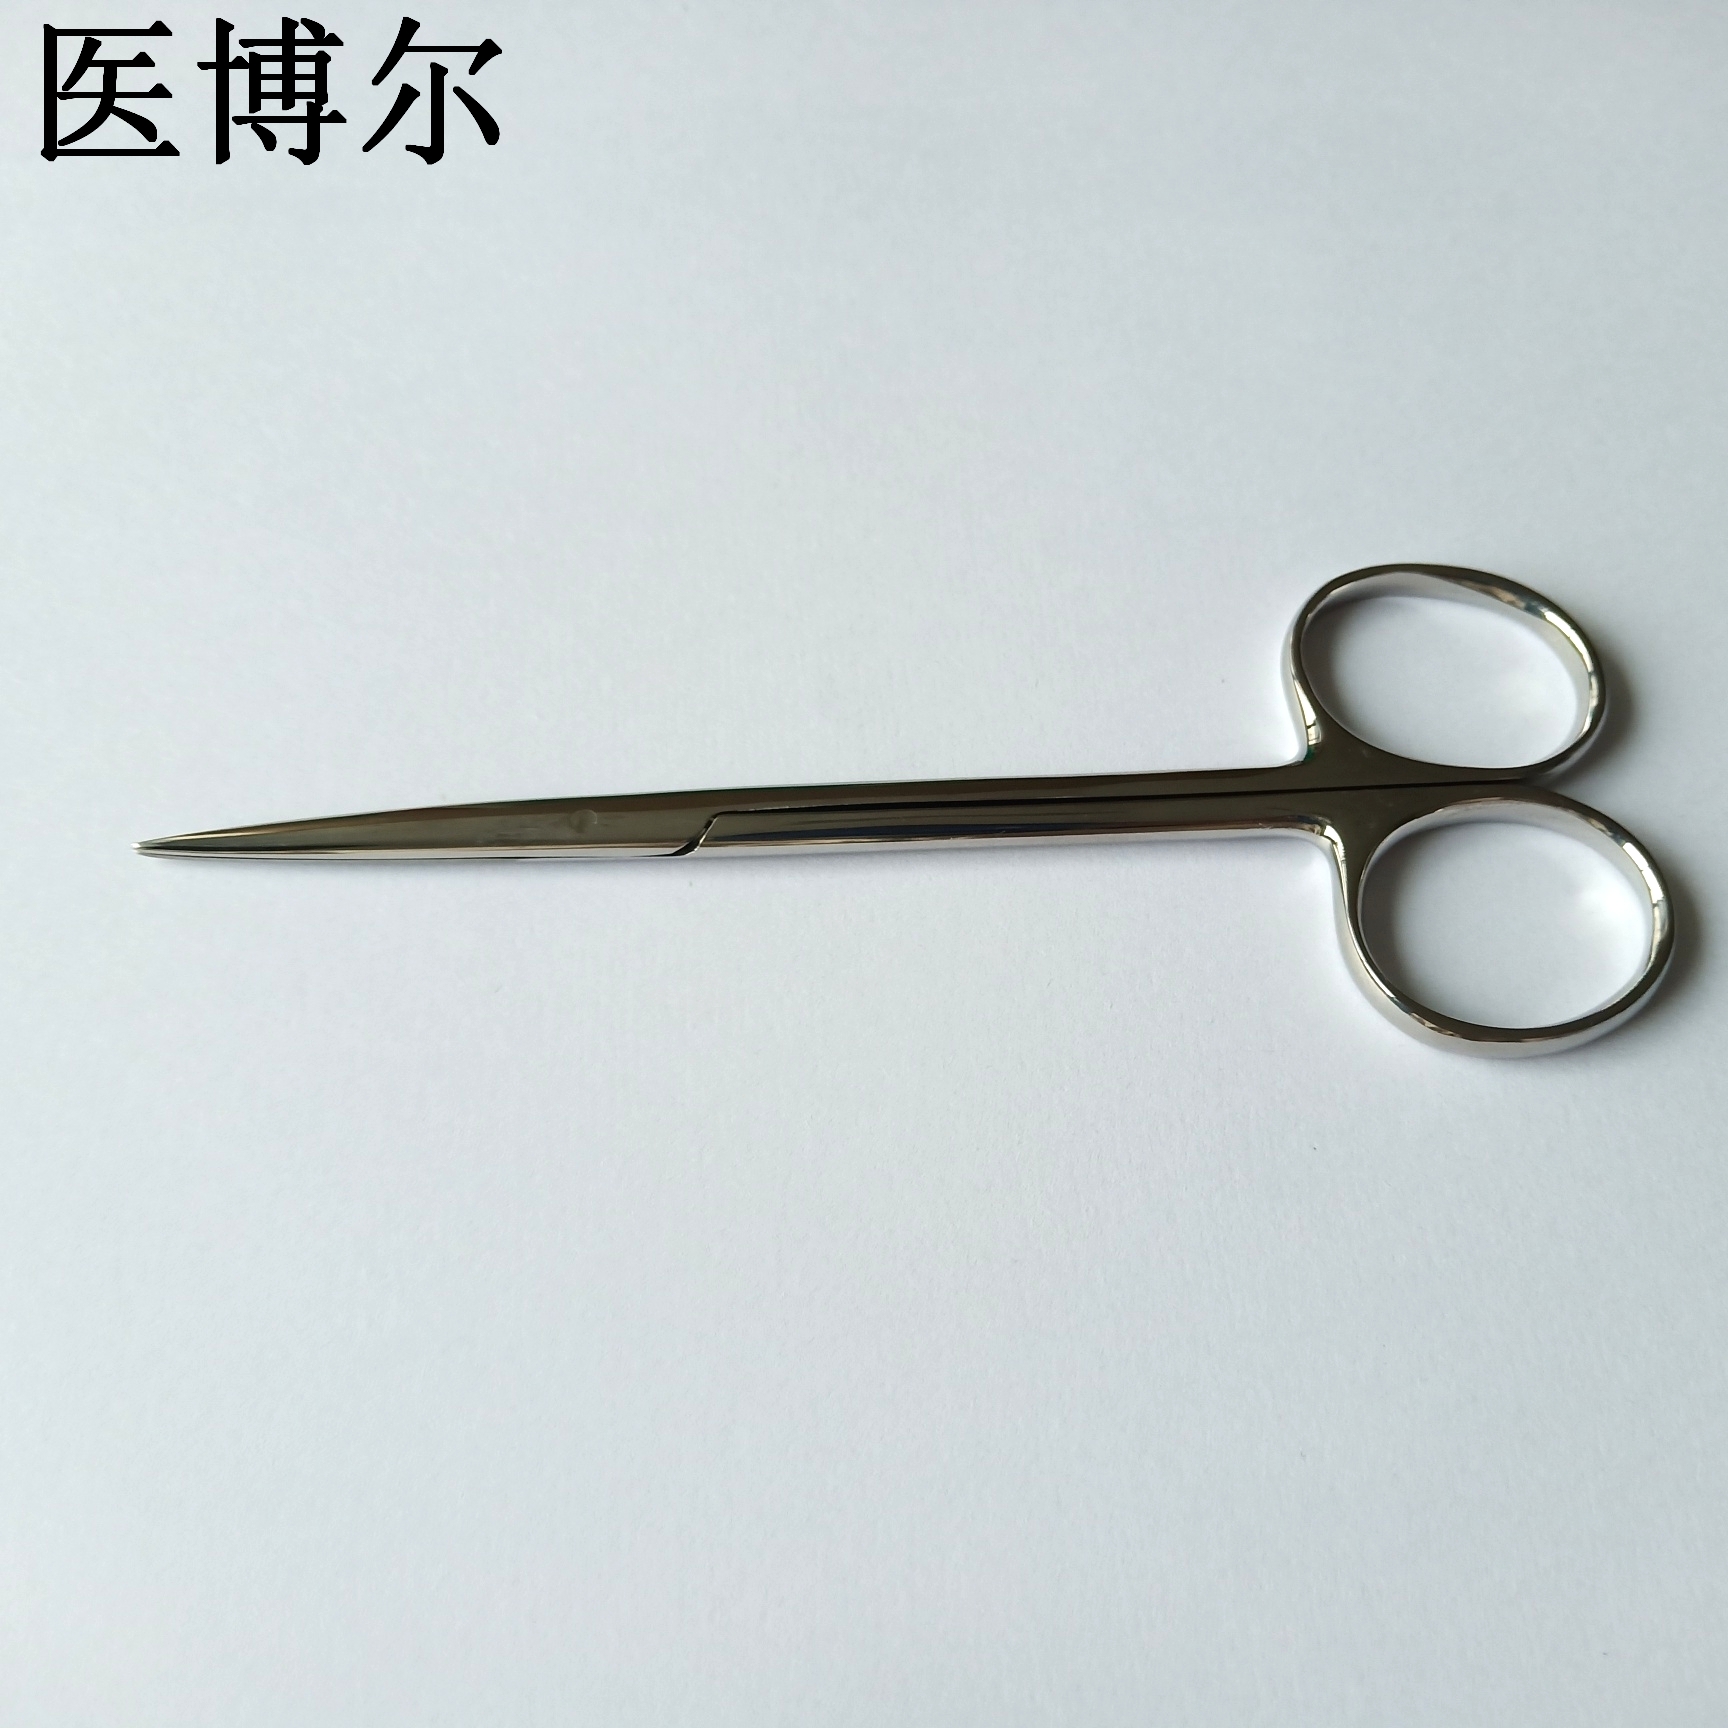 12.5cm精细直尖剪刀 (3)_看图王.jpg